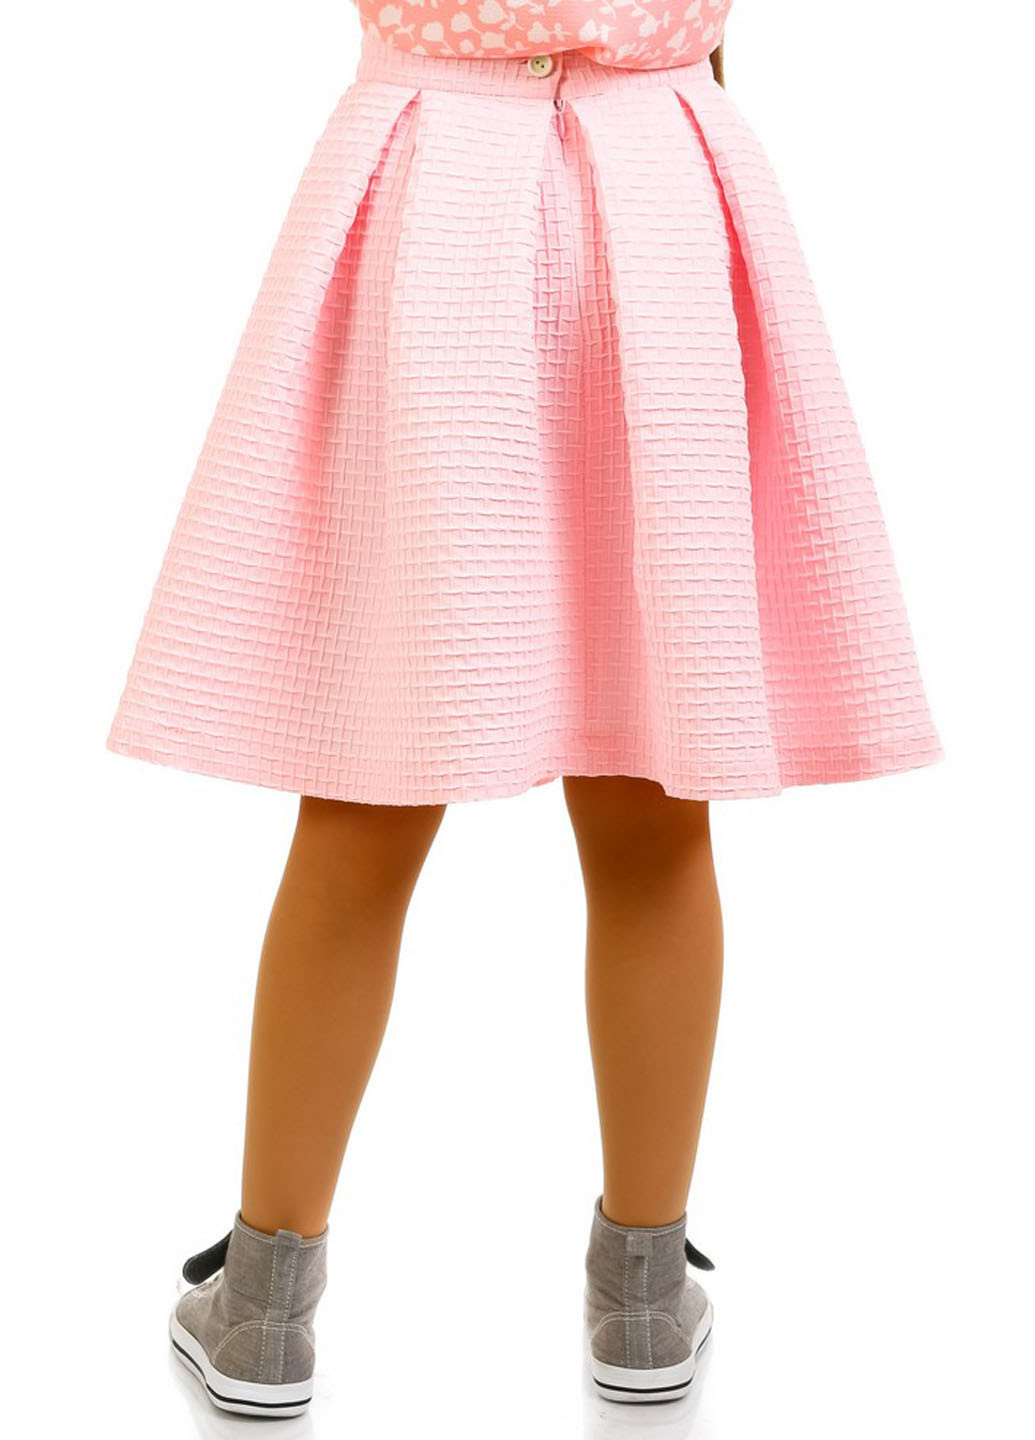 Розовая кэжуал однотонная юбка Kids Couture миди